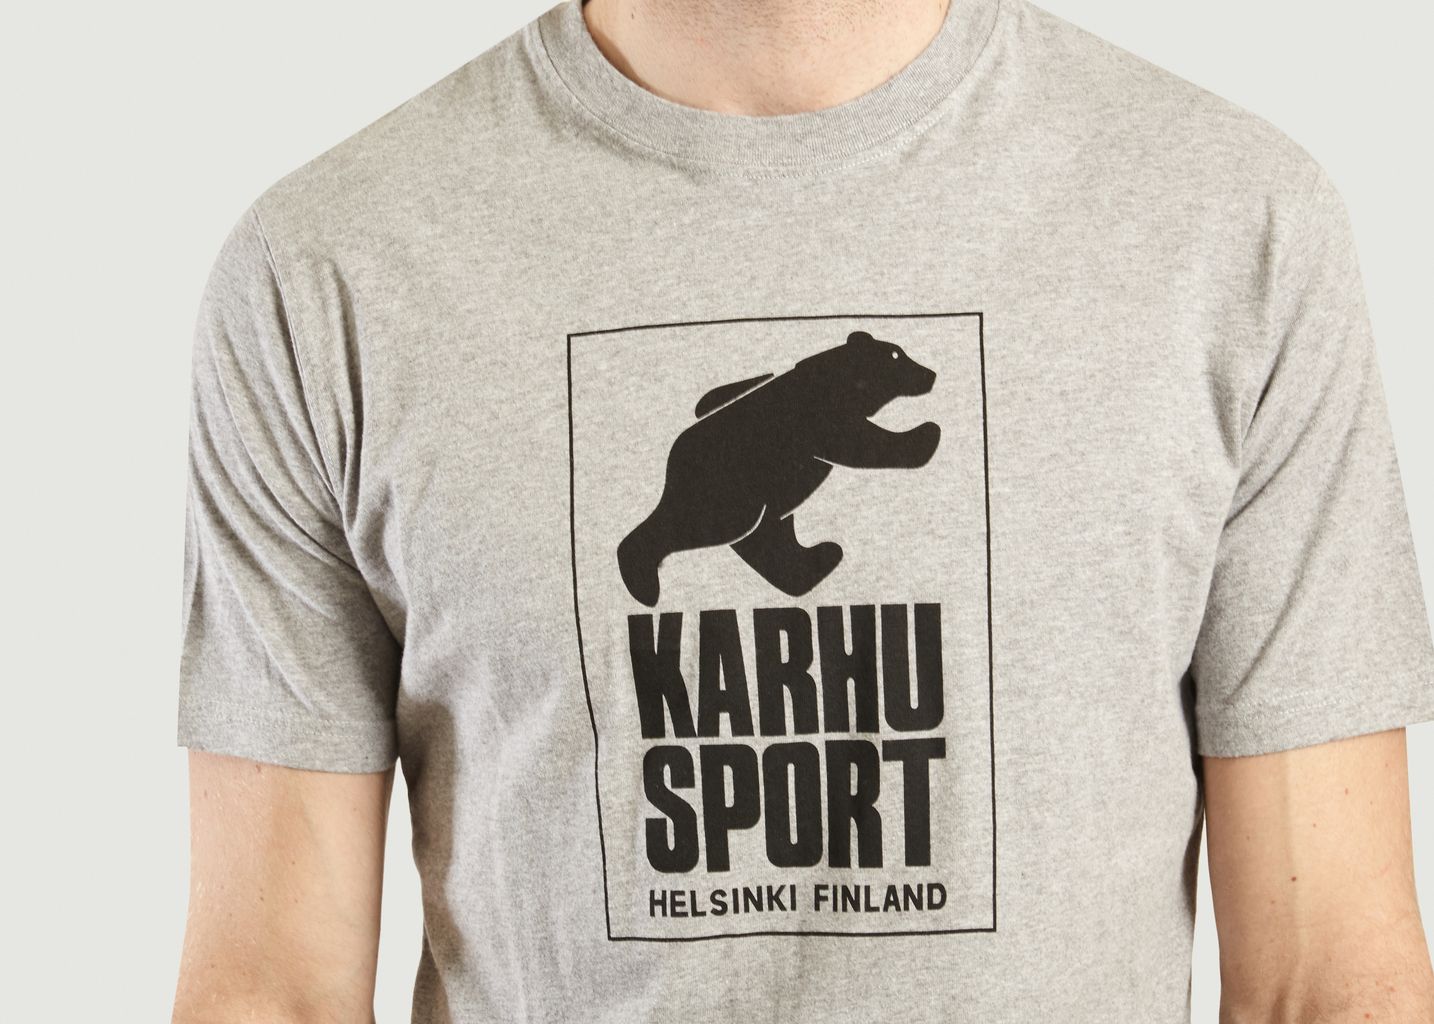 Grey Heather Logo T-shirt - Karhu